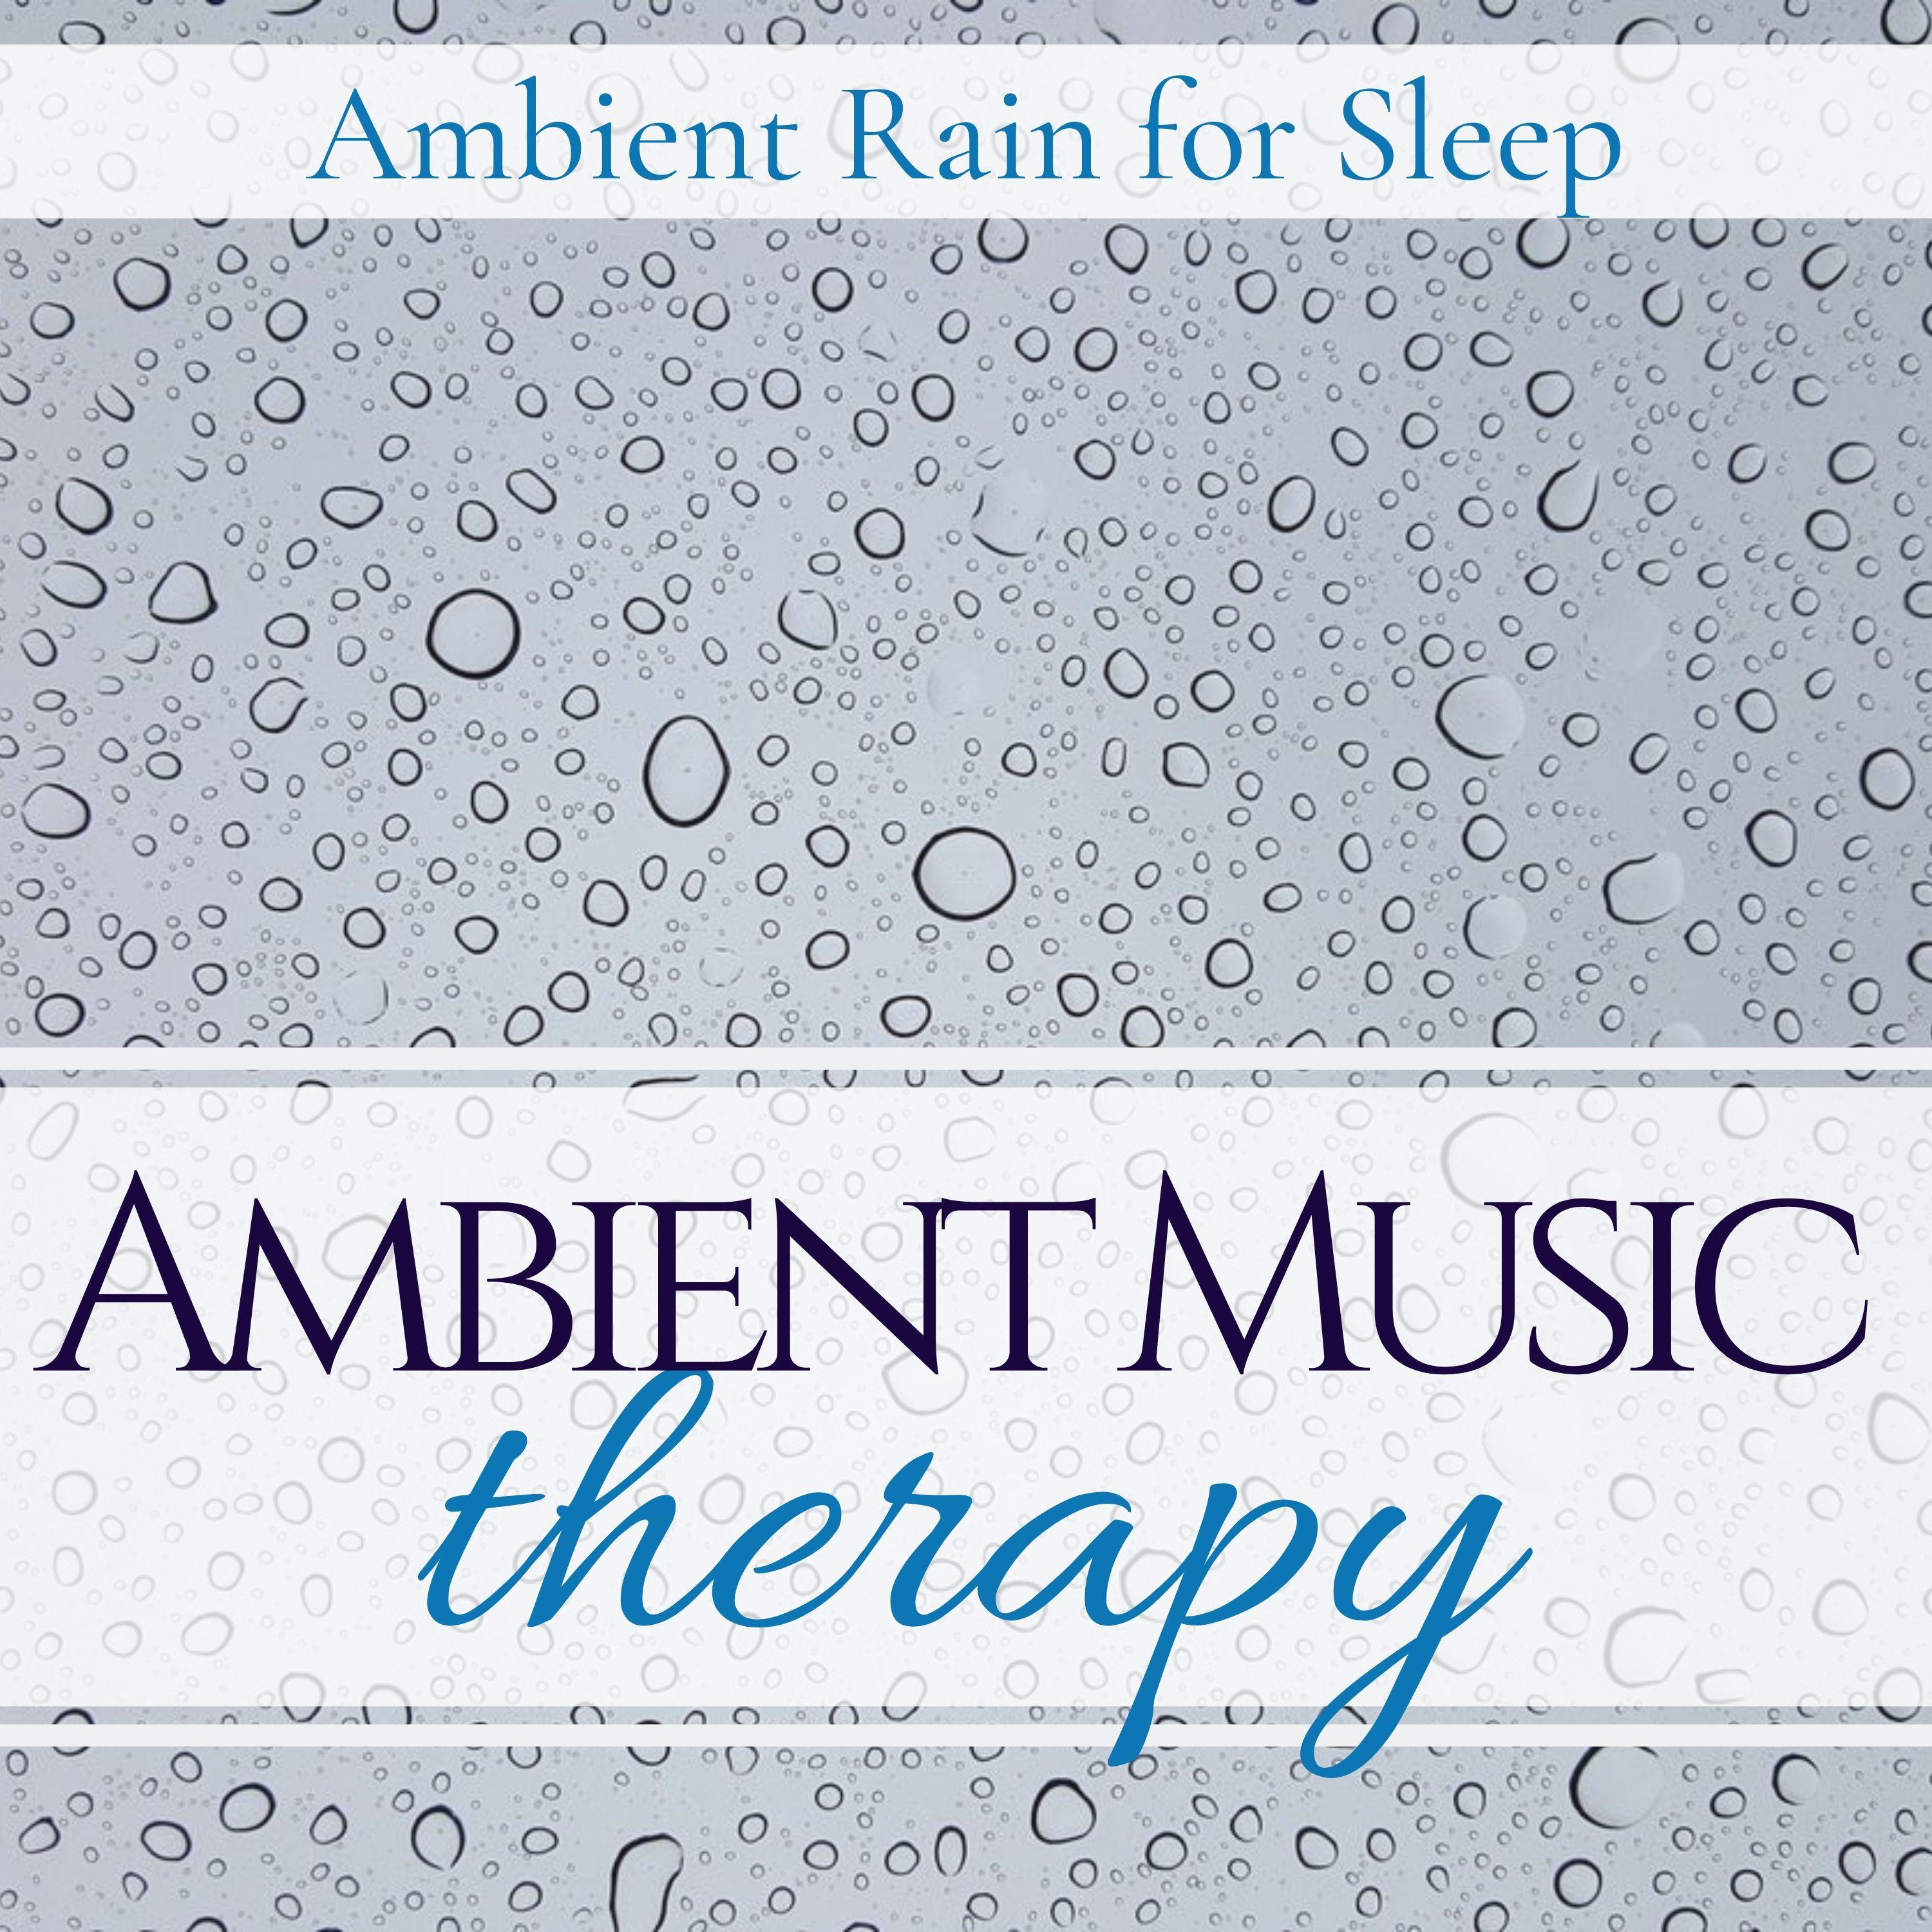 Ambient Rain for Sleep